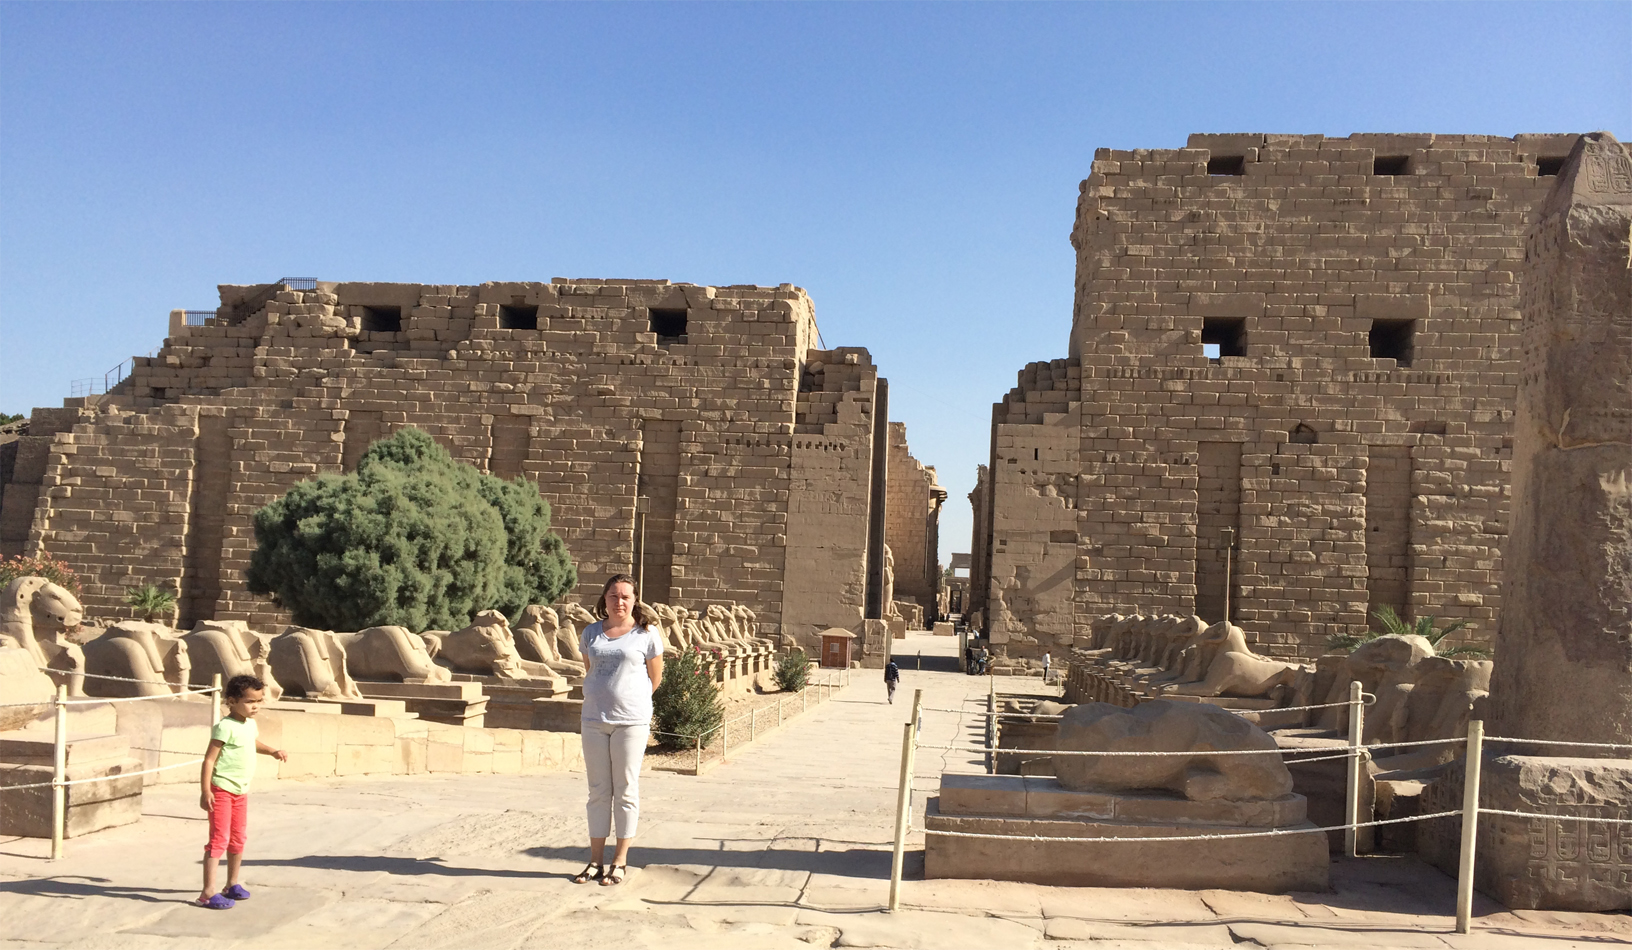 
Ingresso nel tempio di Karnak